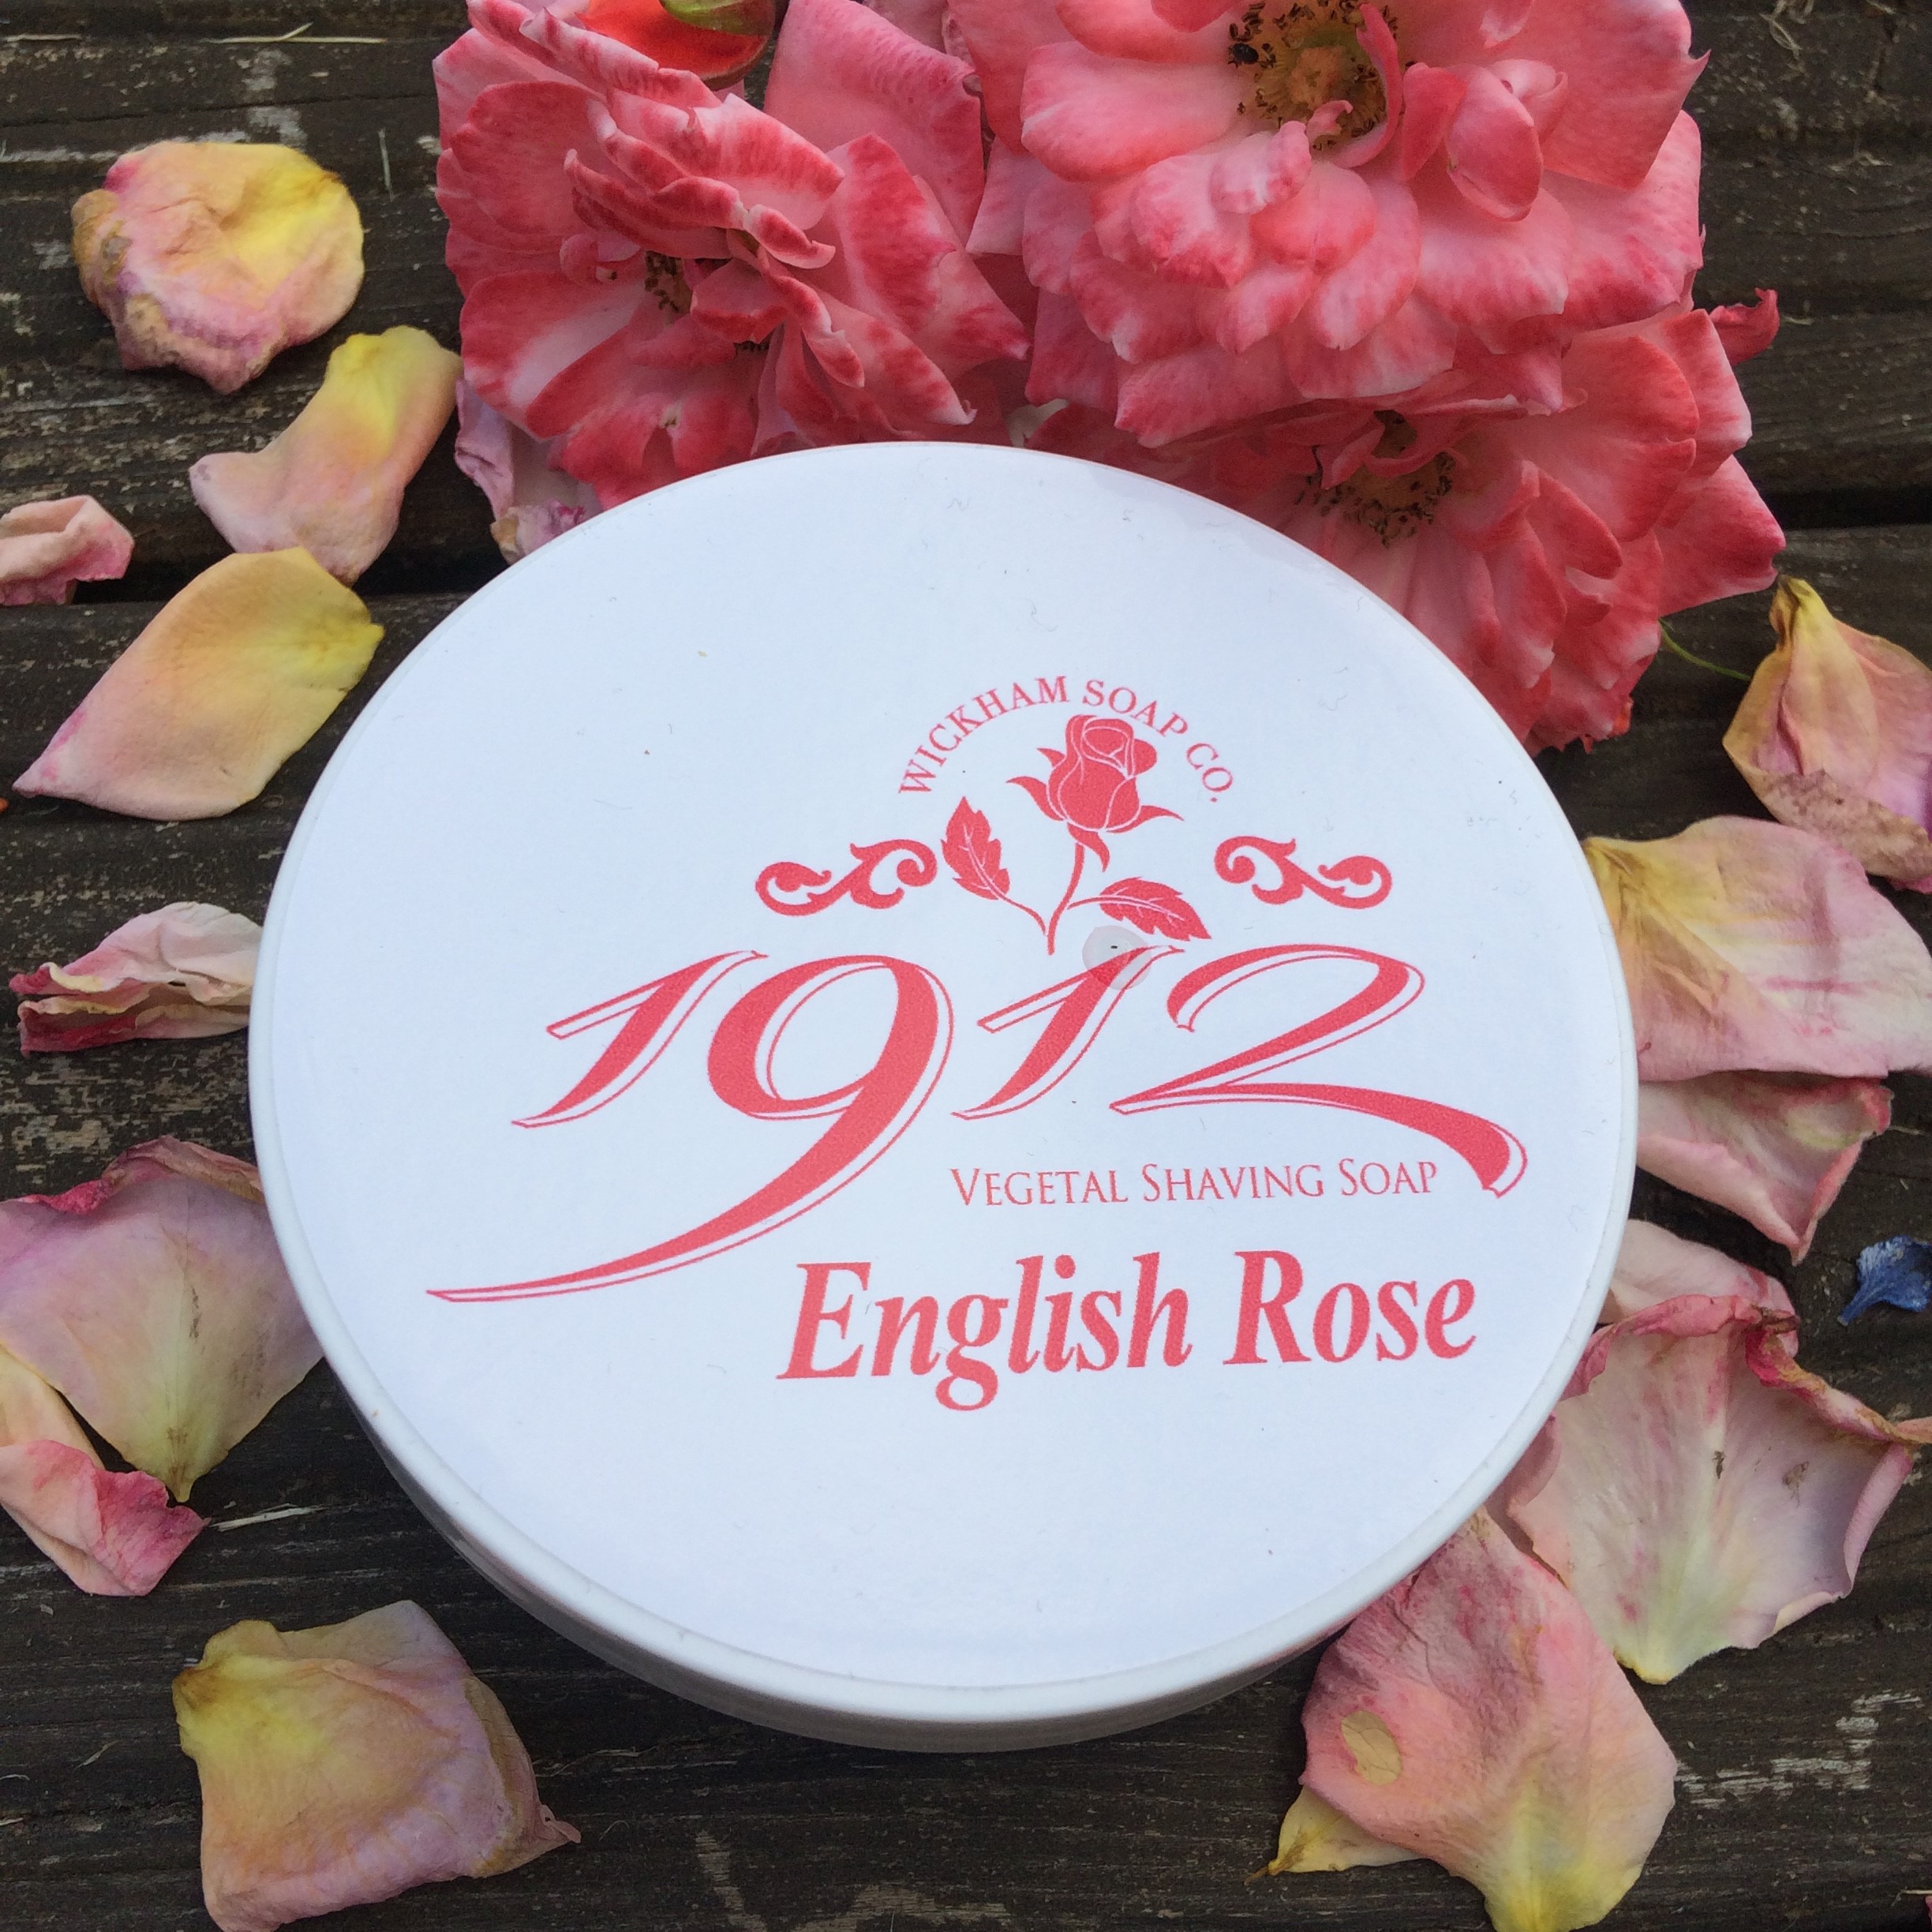 Wickham Soap Co 1912 Shaving Soap - English Rose | Agent Shave